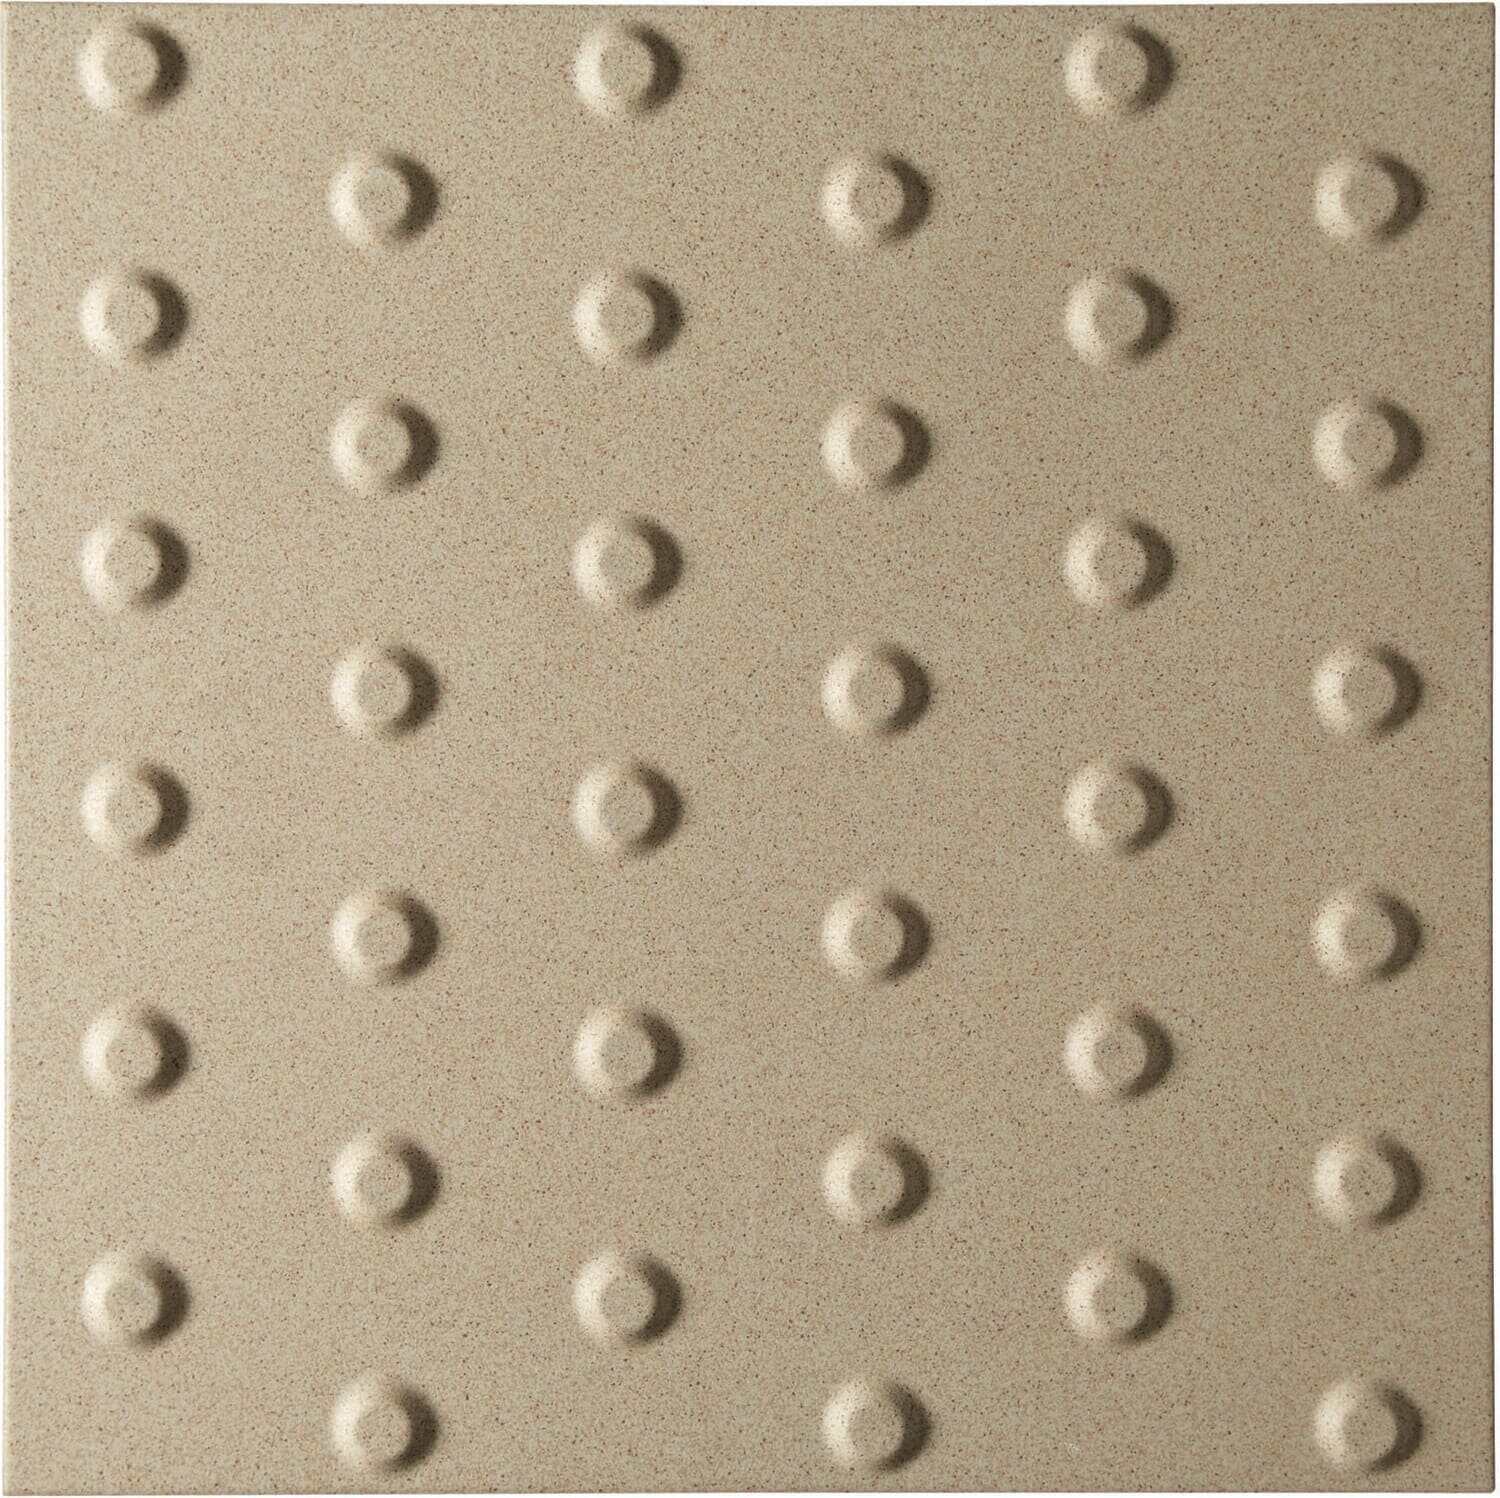 Dorset Woolliscroft Tactile Blister Sand Slip Resistant Quarry Tile 400x400mm